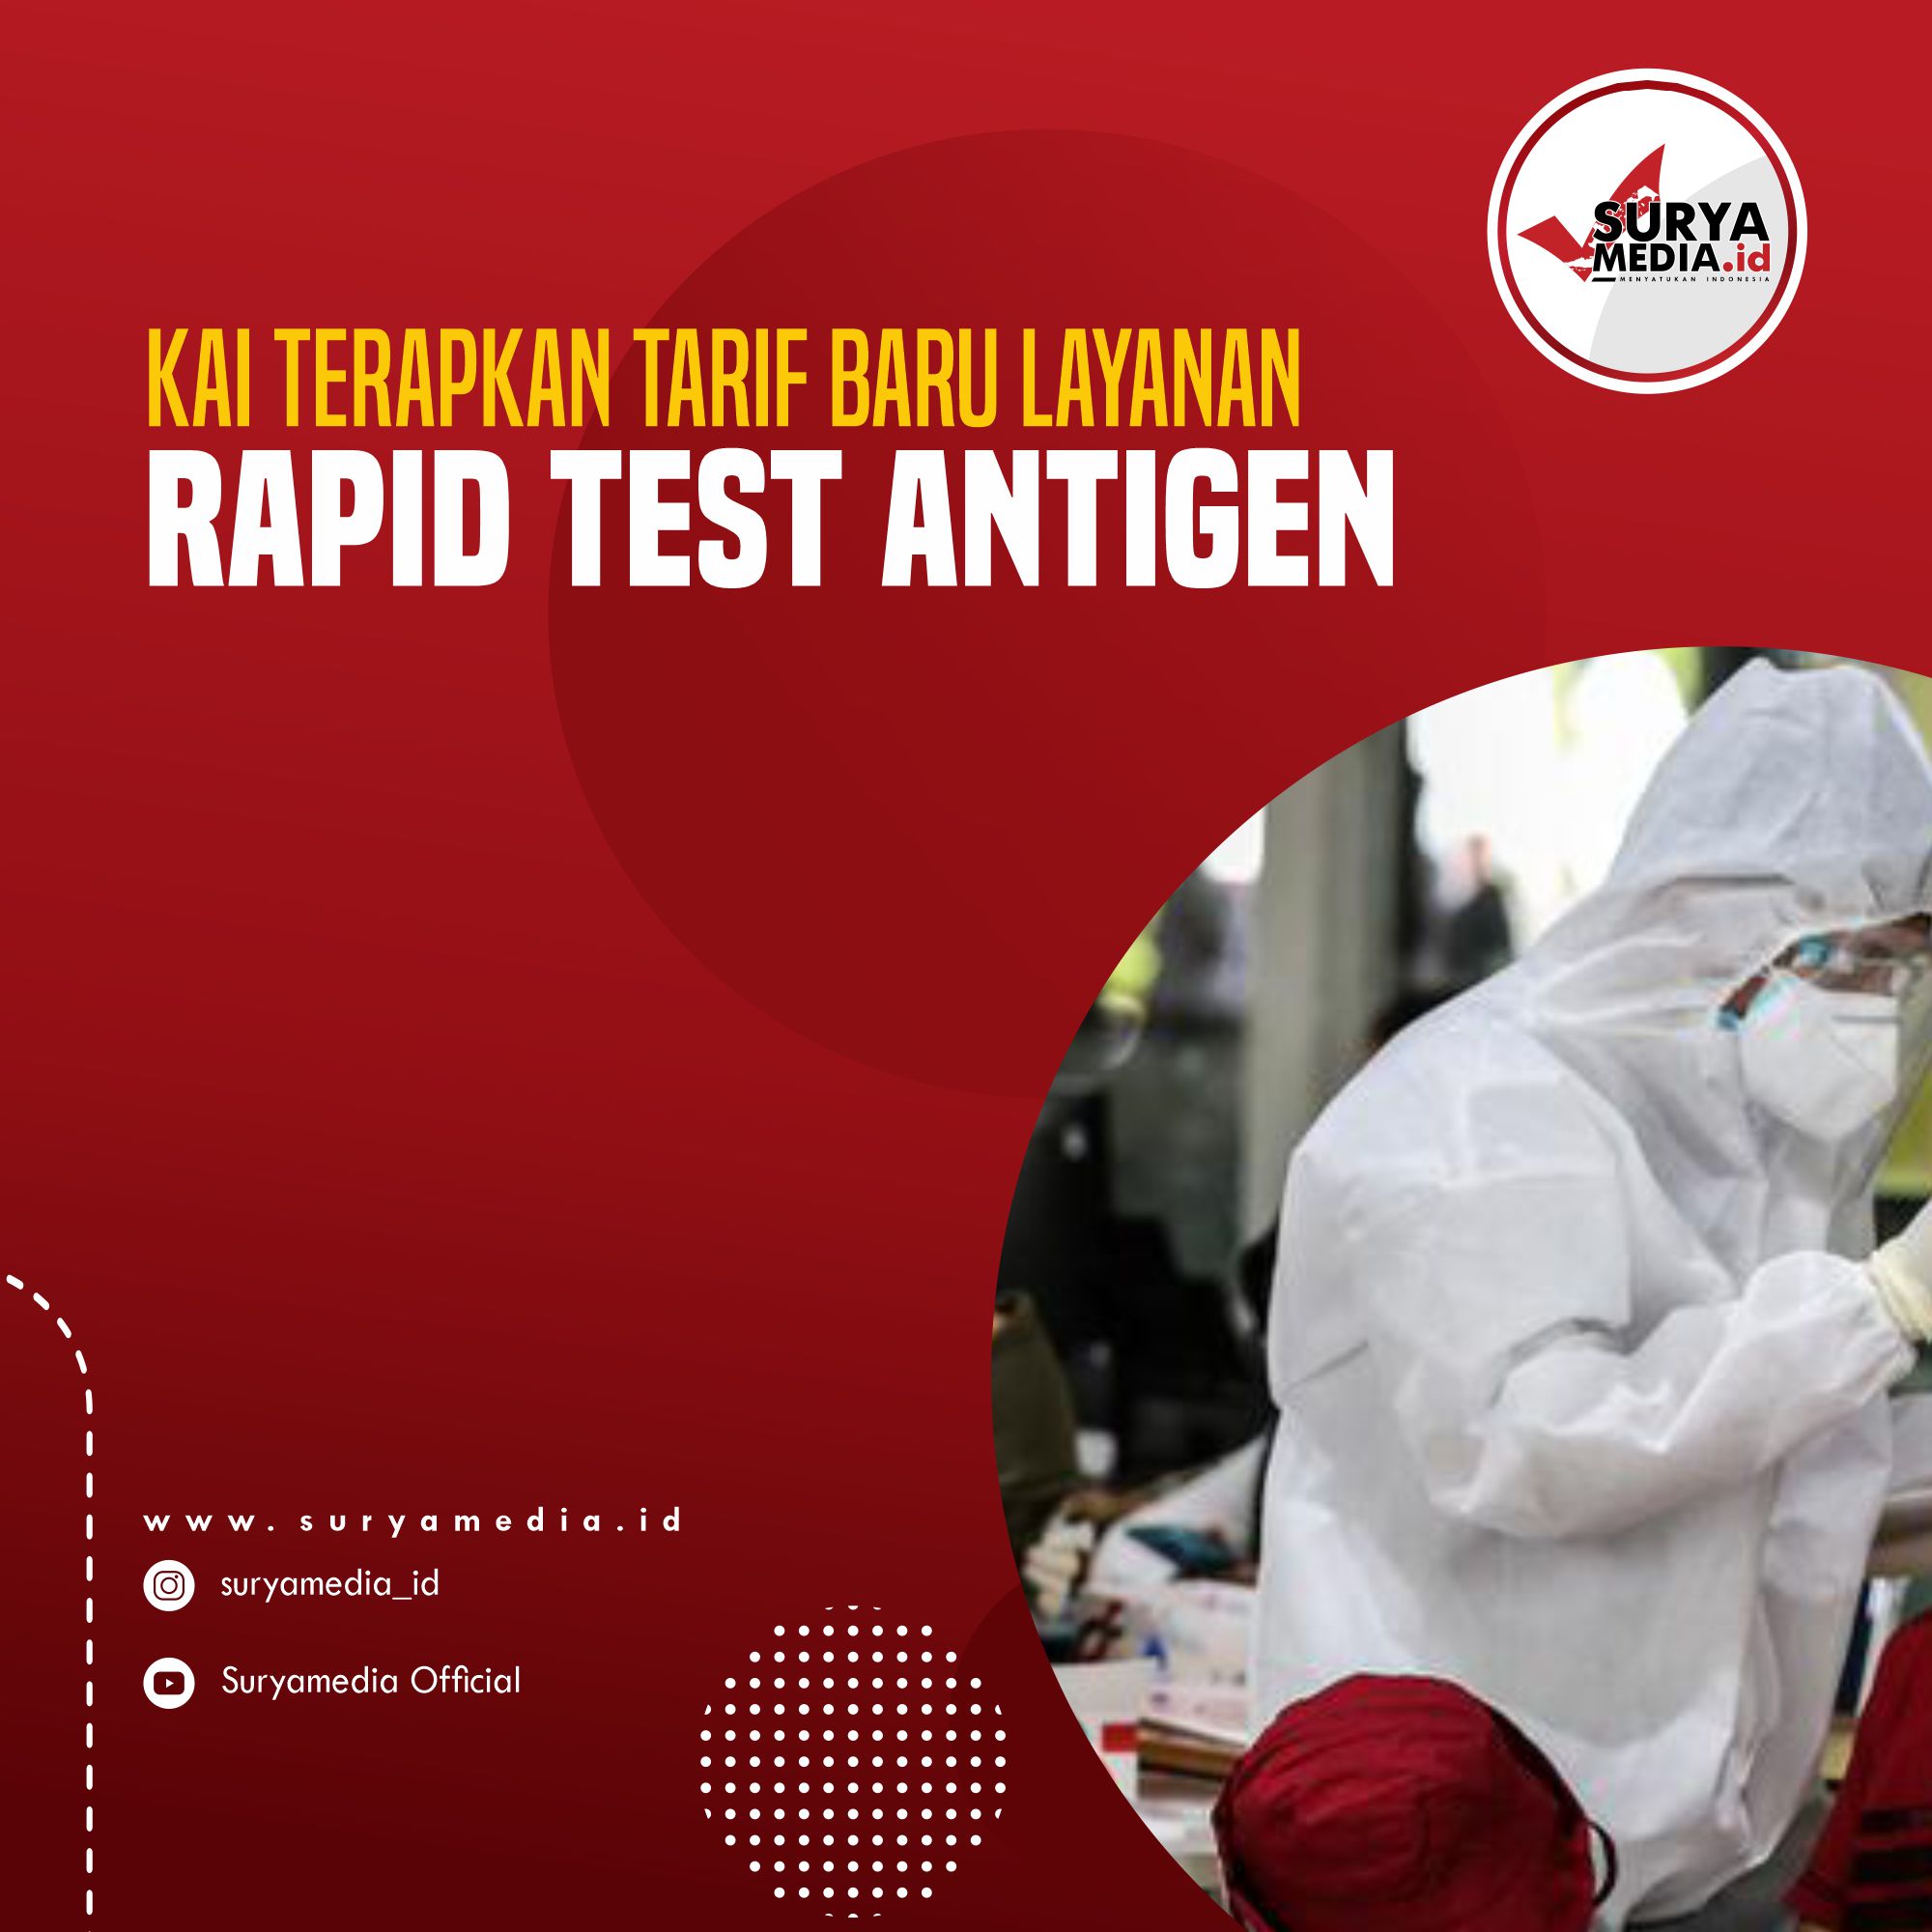 Kai terapkan tarif baru layanan rapid test antigen